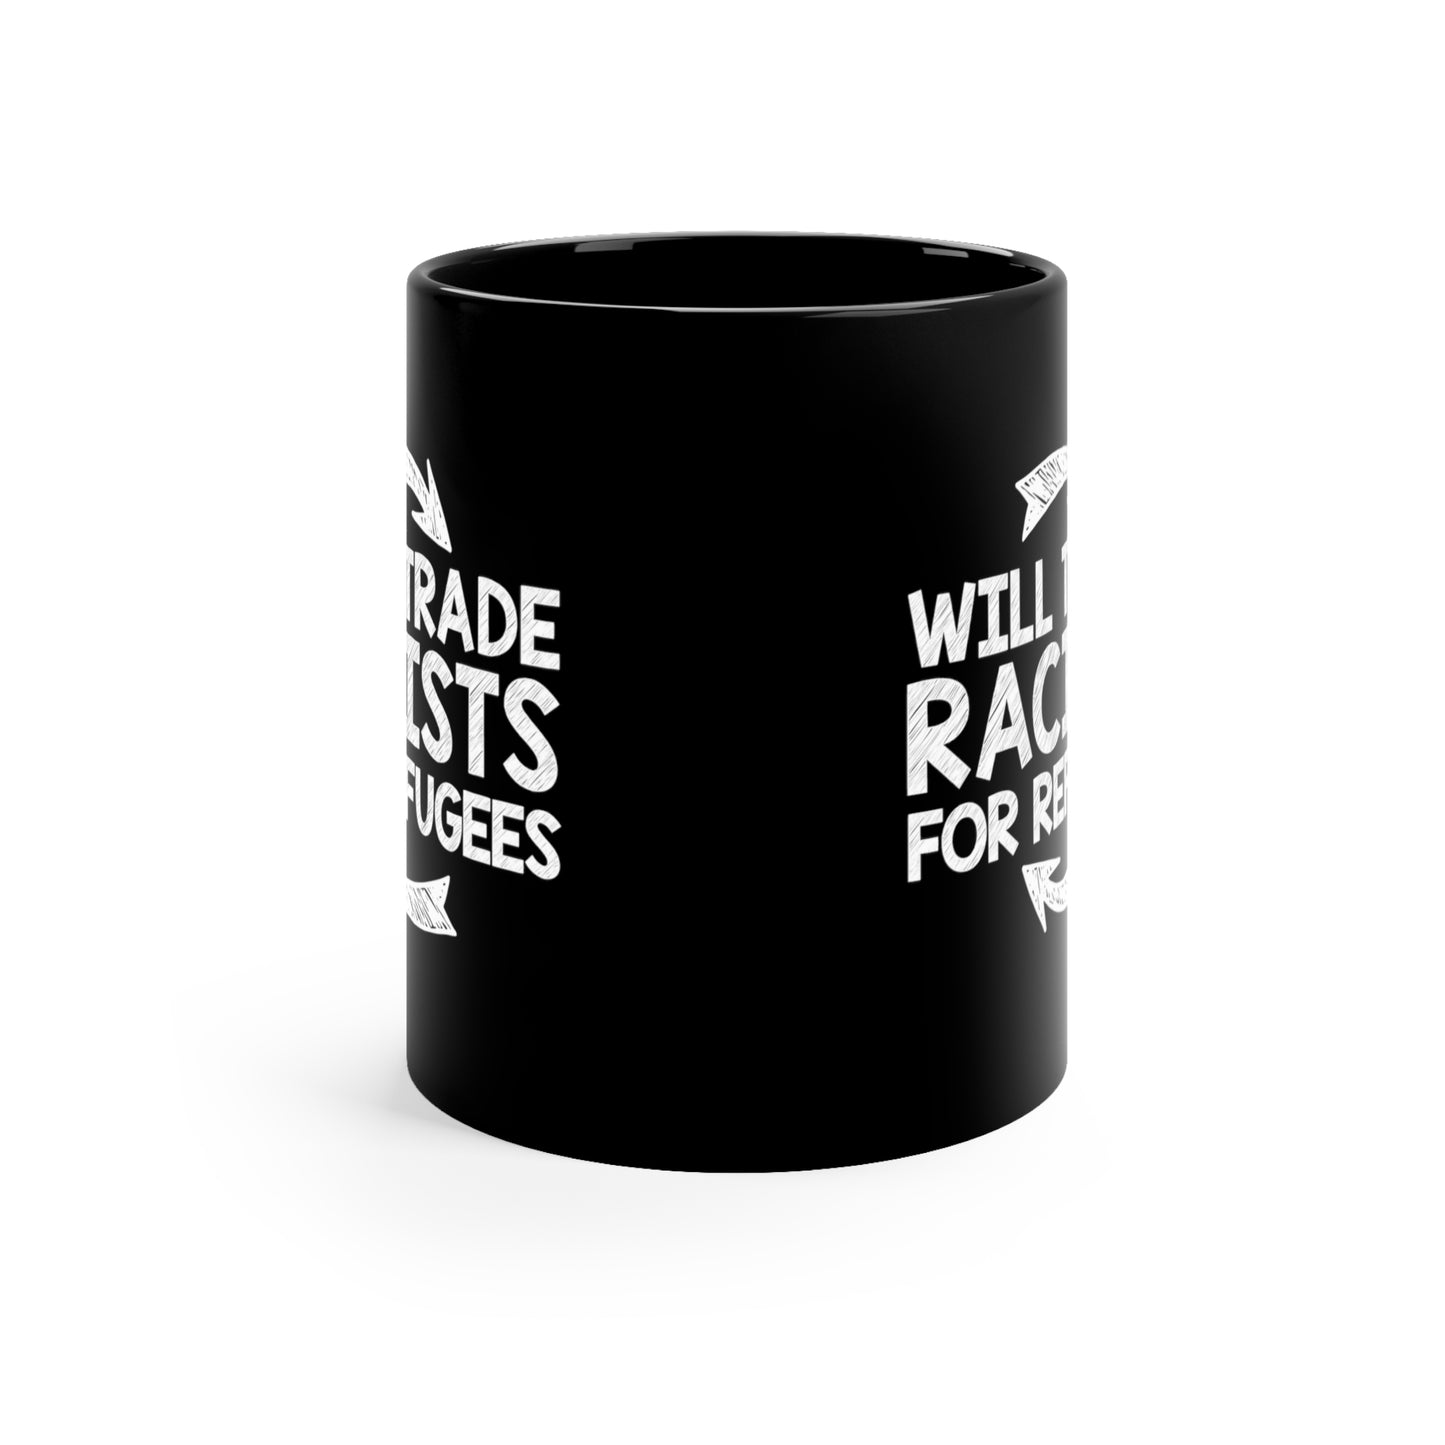 “Will Trade Racists for Refugees” 11 oz. Mug